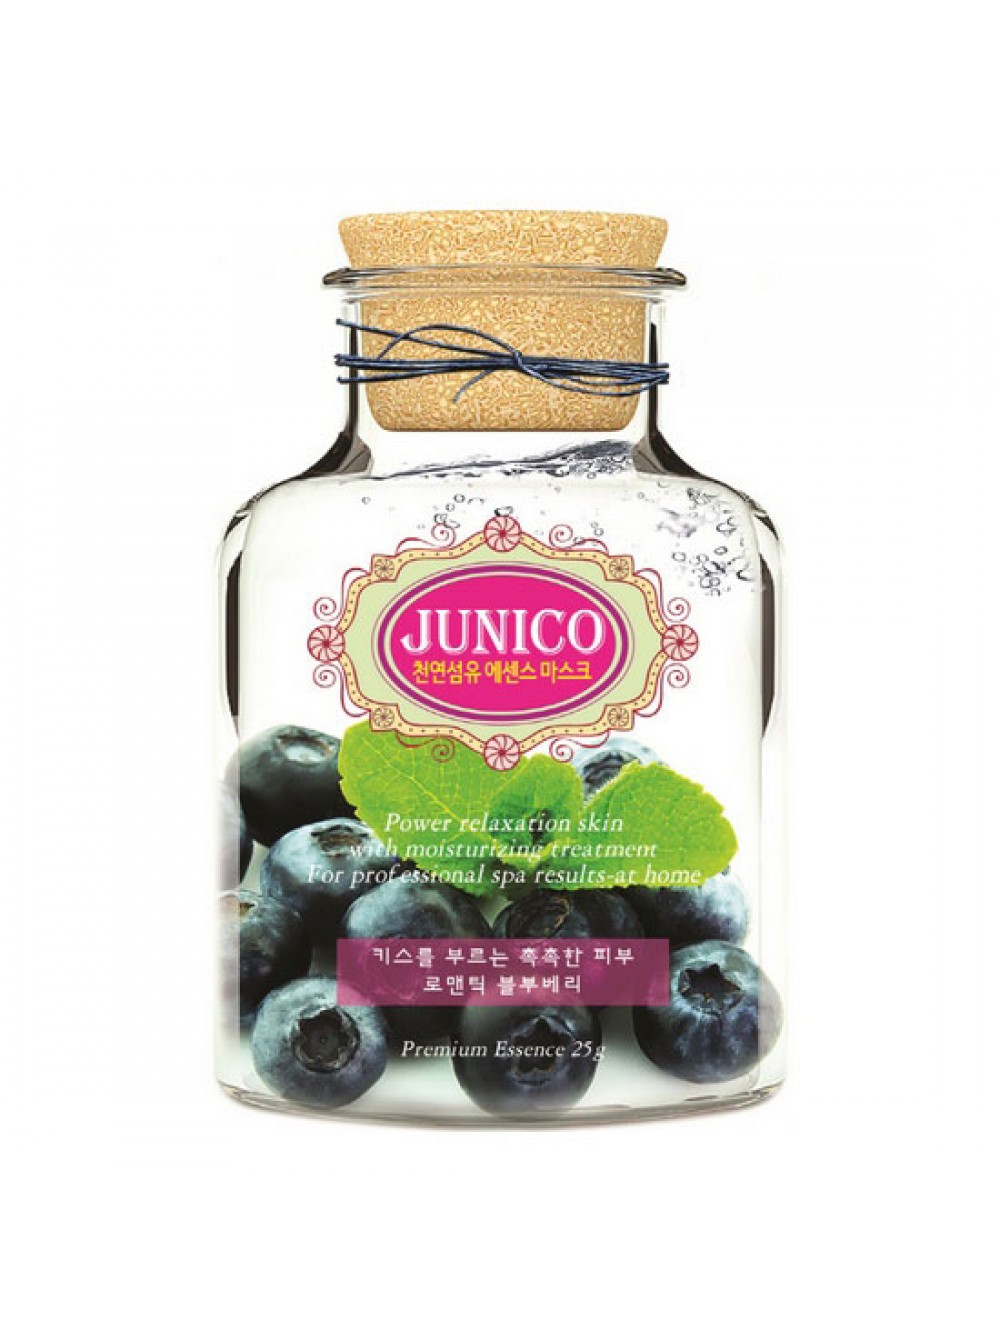 фото Маска mijin junico blueberry essence mask с экстрактом черники 25гр